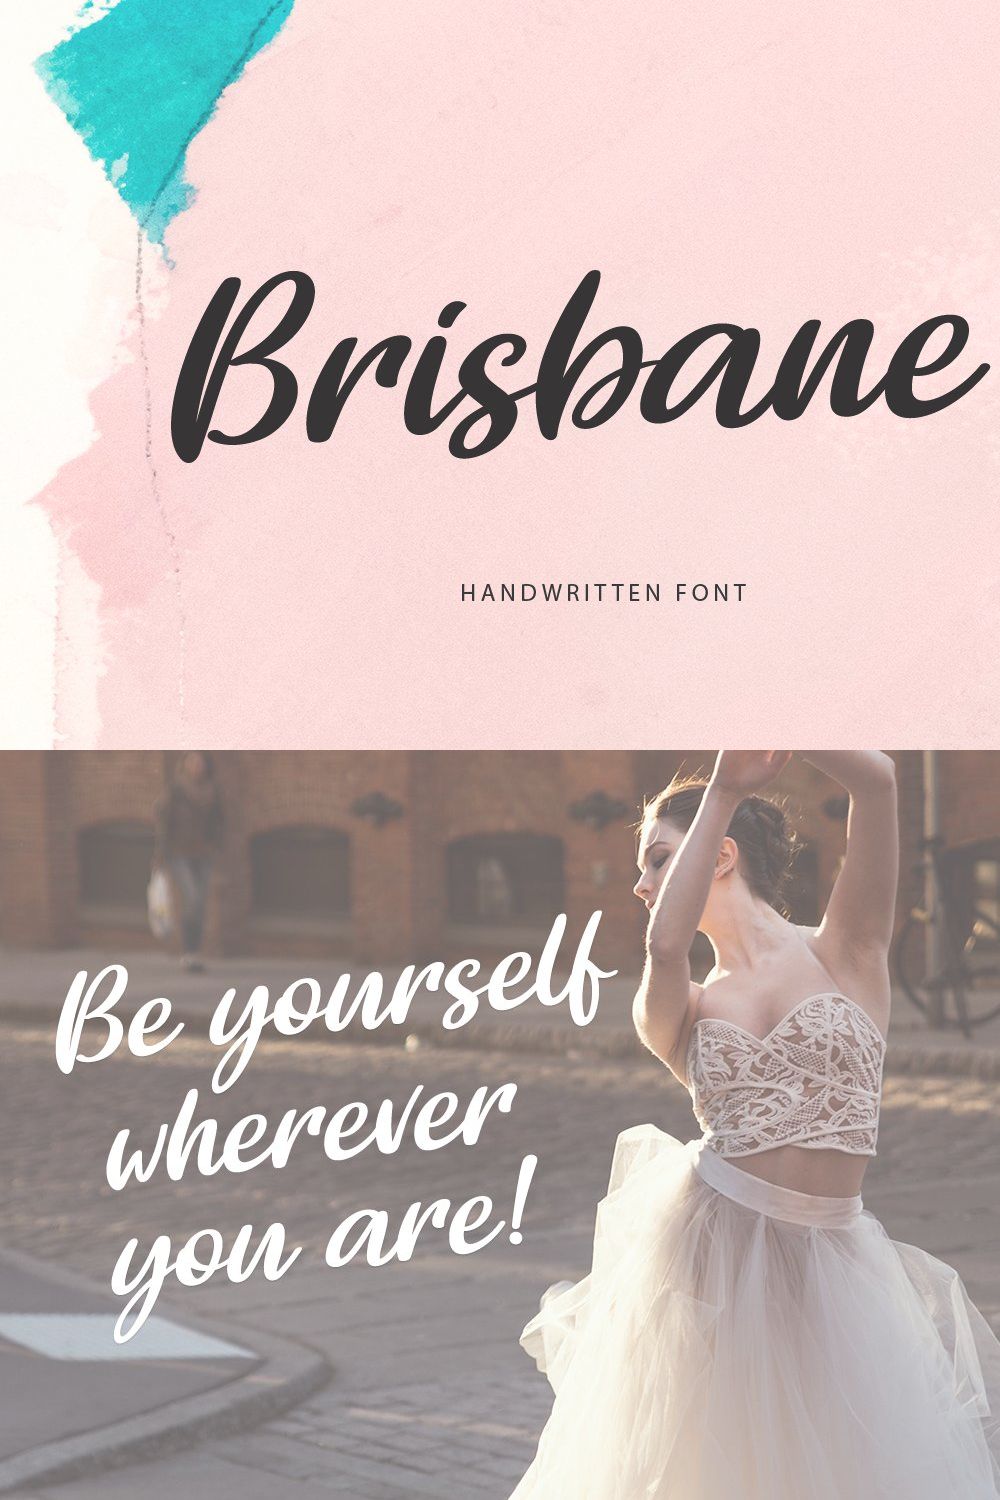 Brisbane pinterest preview image.